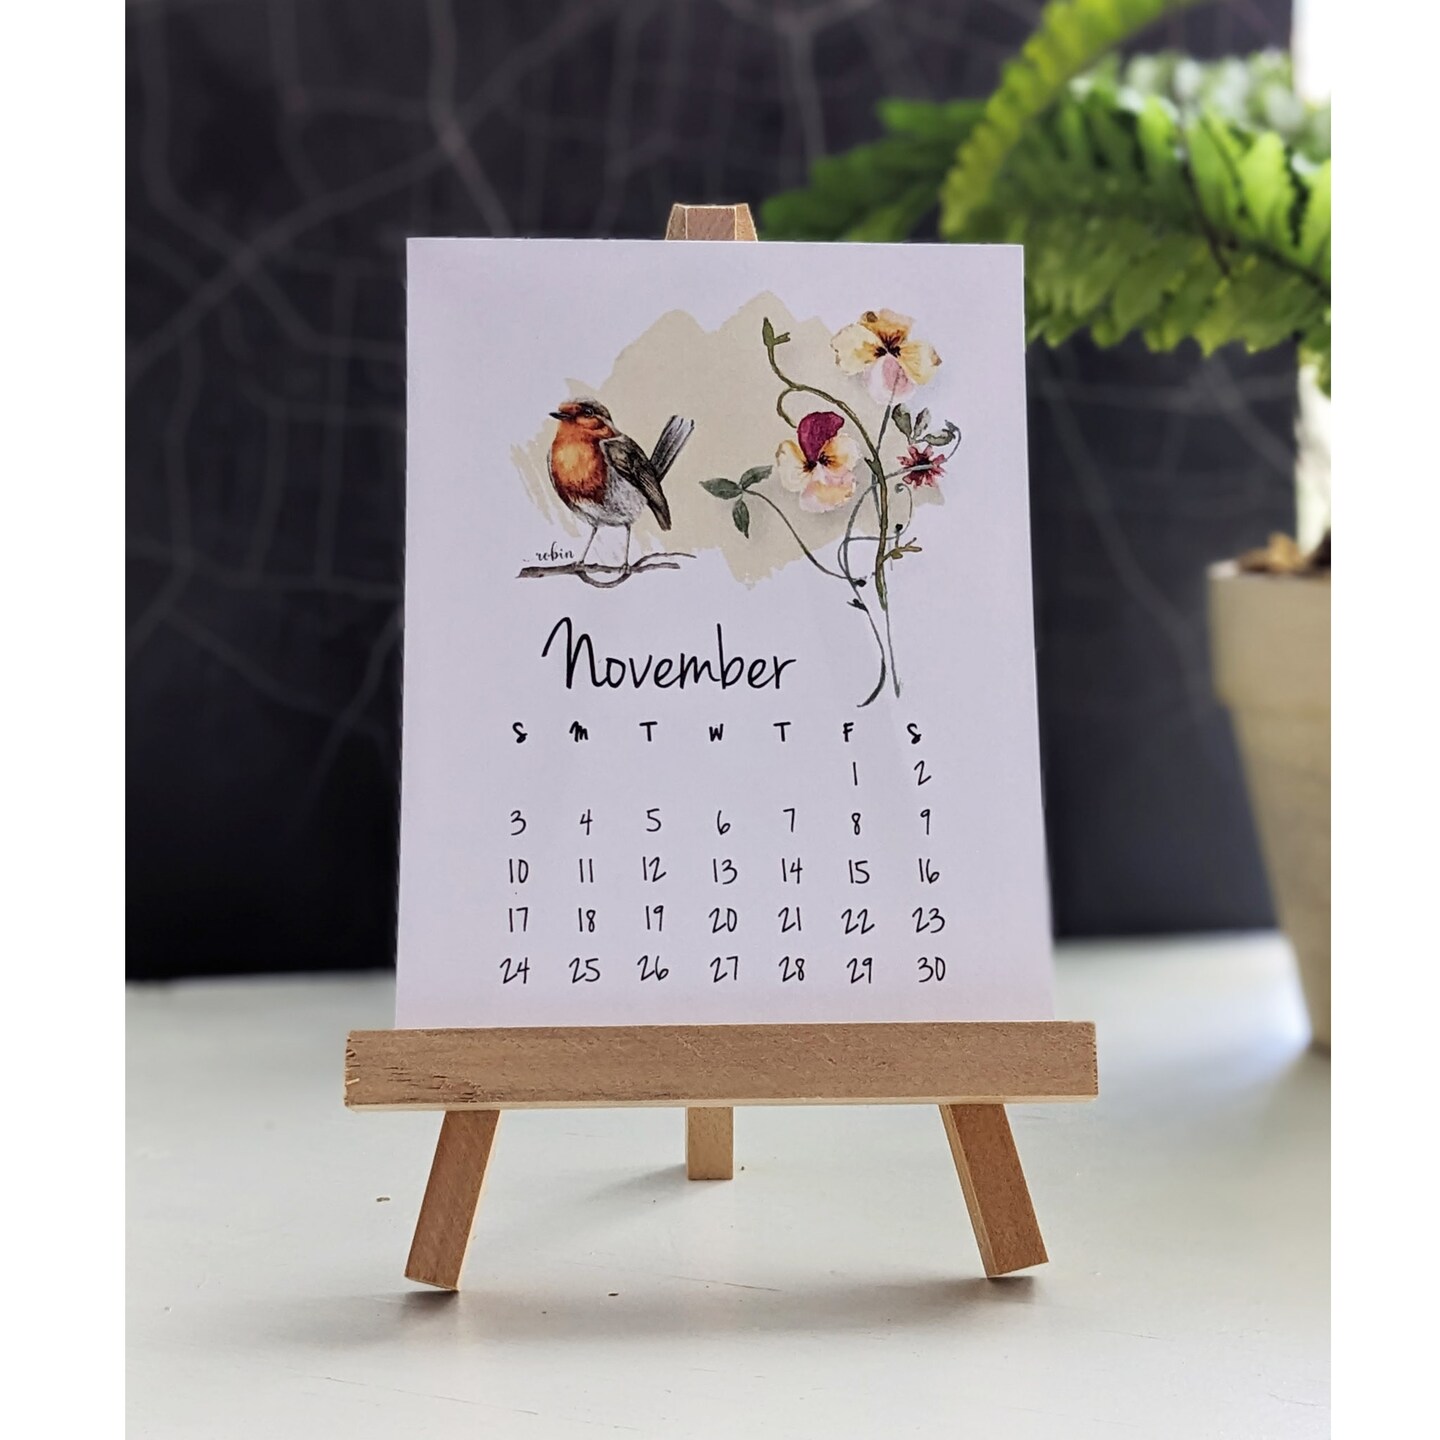 Stunning personalised calendar ideas | Snapfish UK